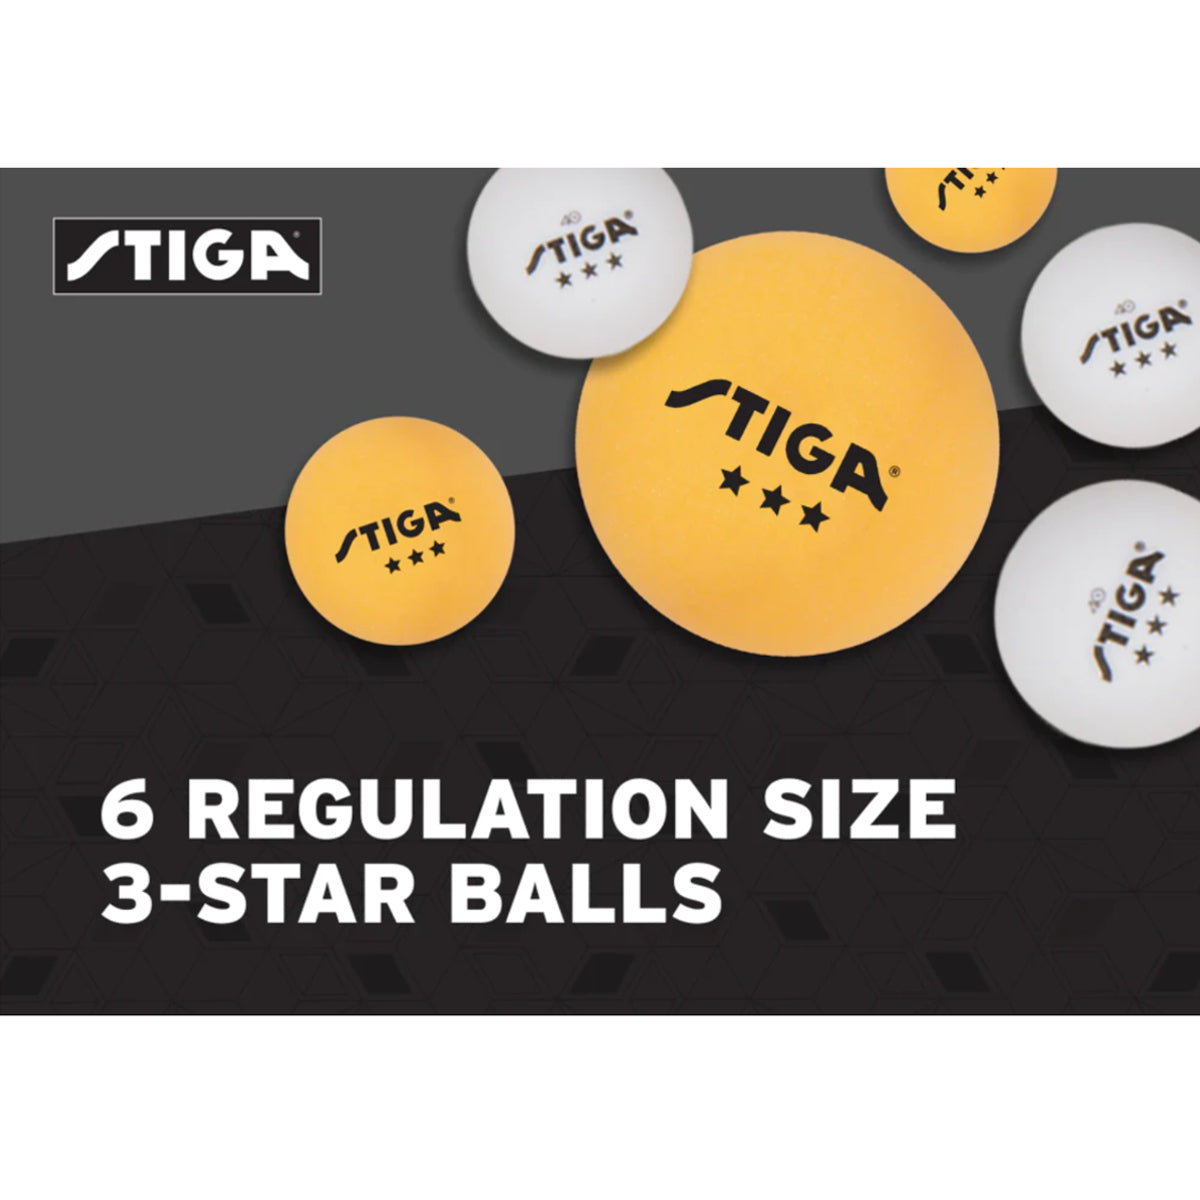 STIGA Performance 4 Player Ping Pong Paddle Set of 4